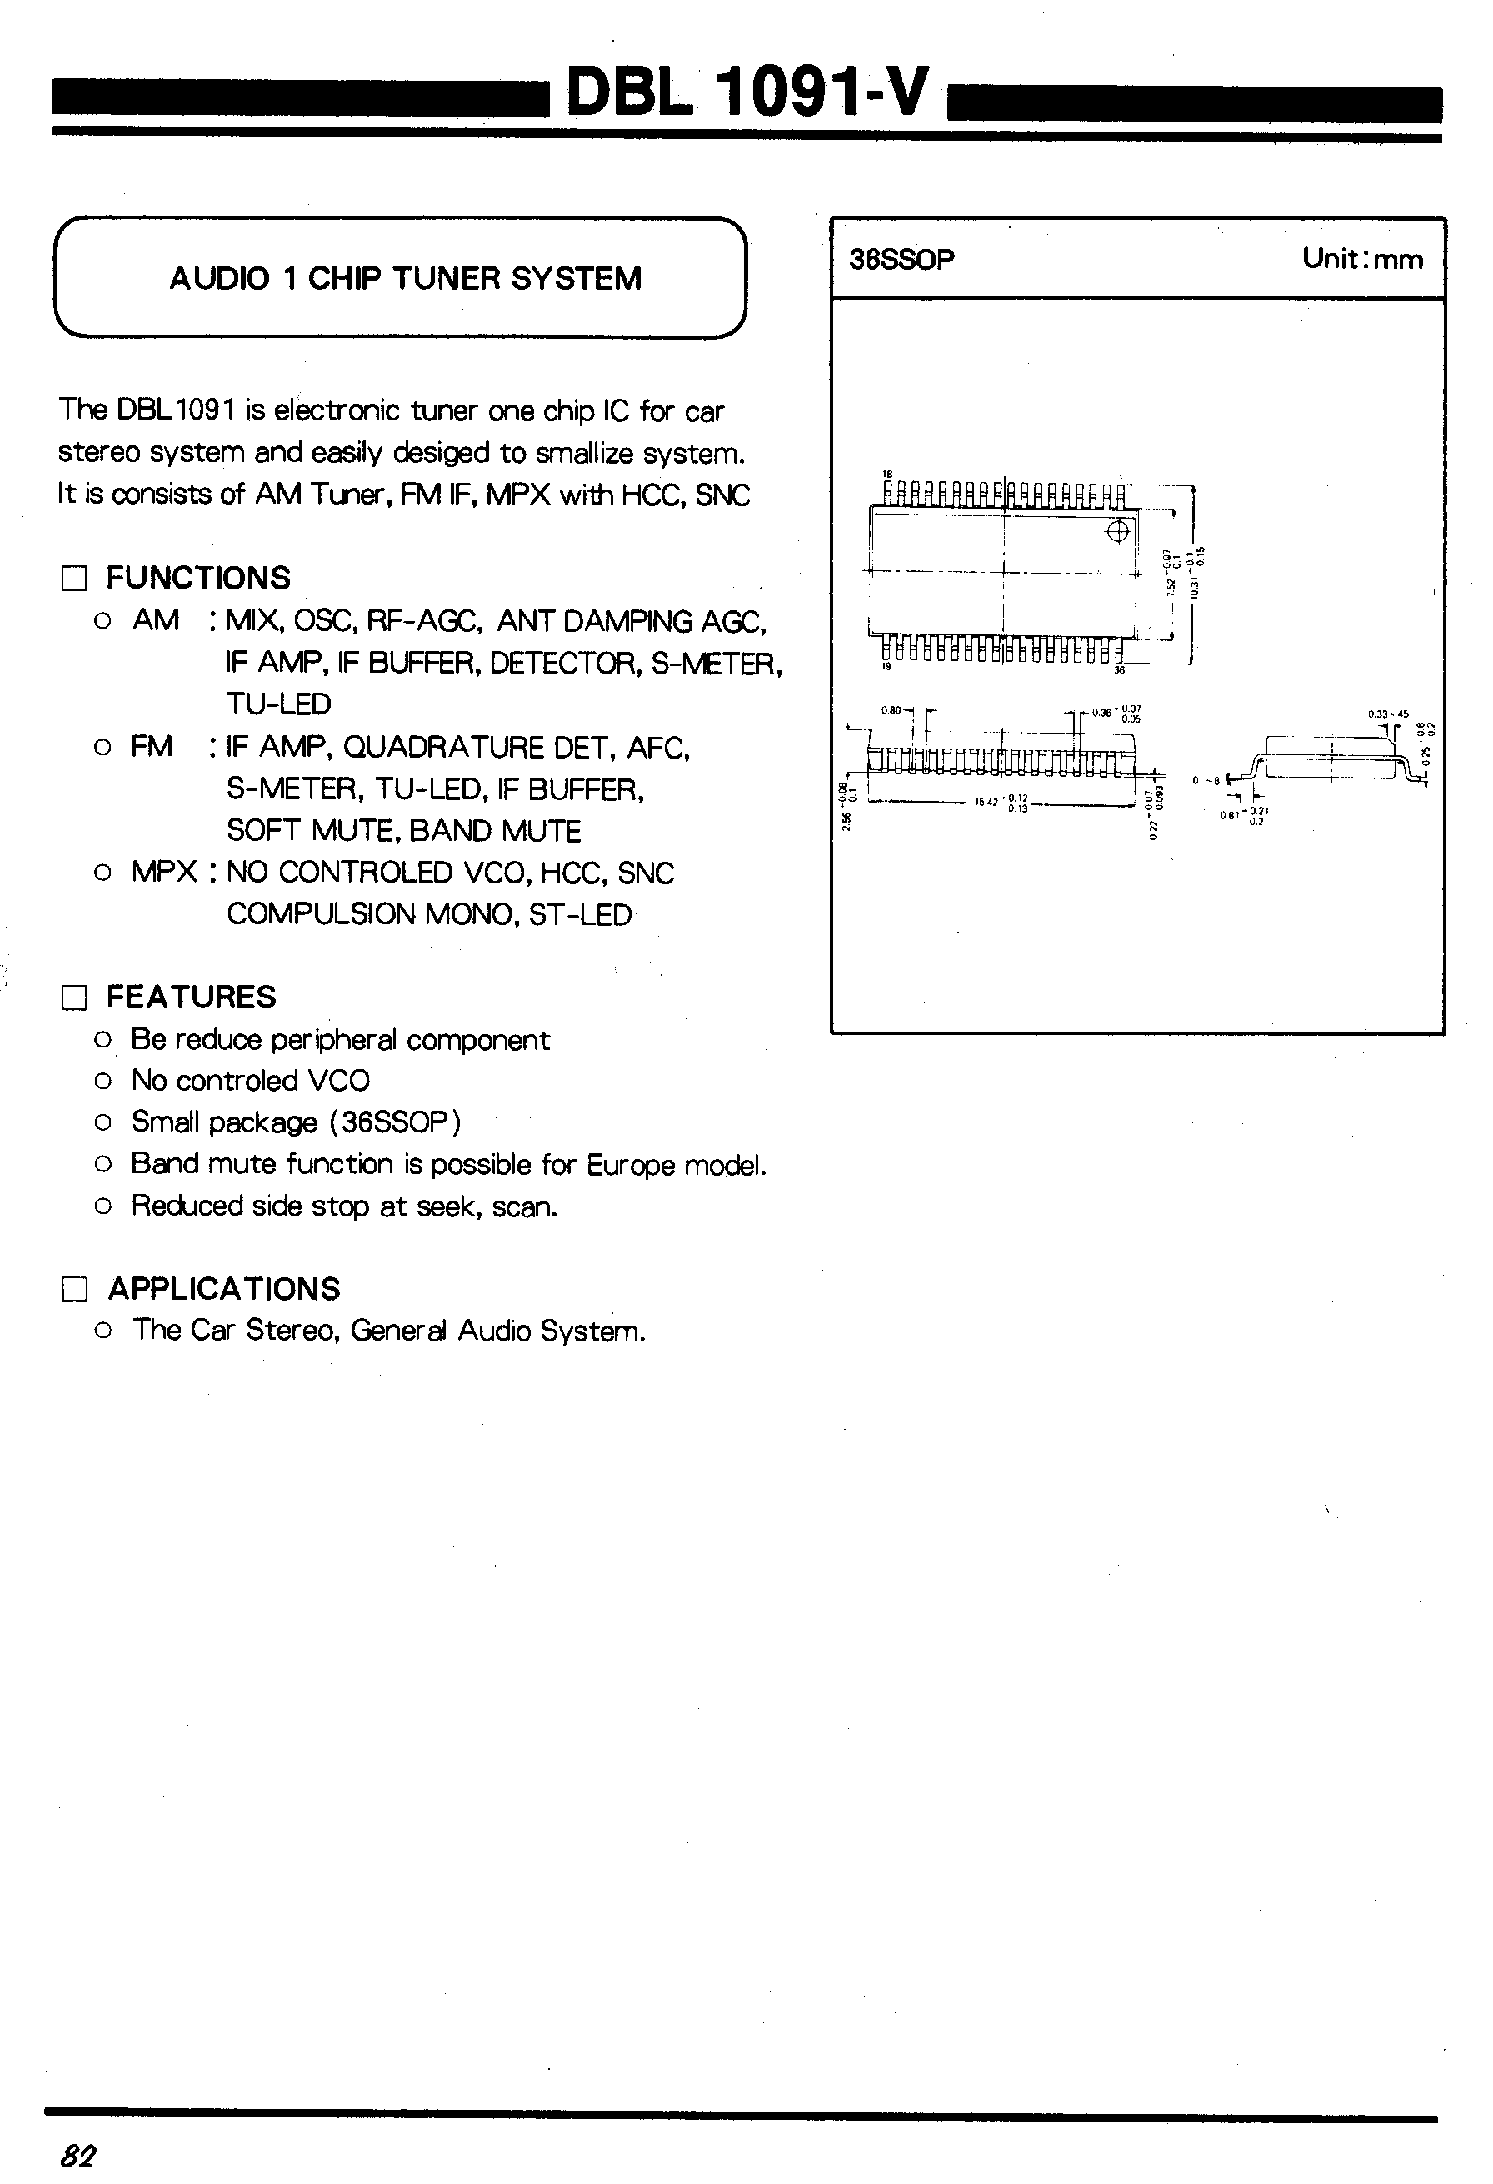 Datasheet DBL1091-V - AUDIO 1 CHIP TUNER SYSTEM page 1